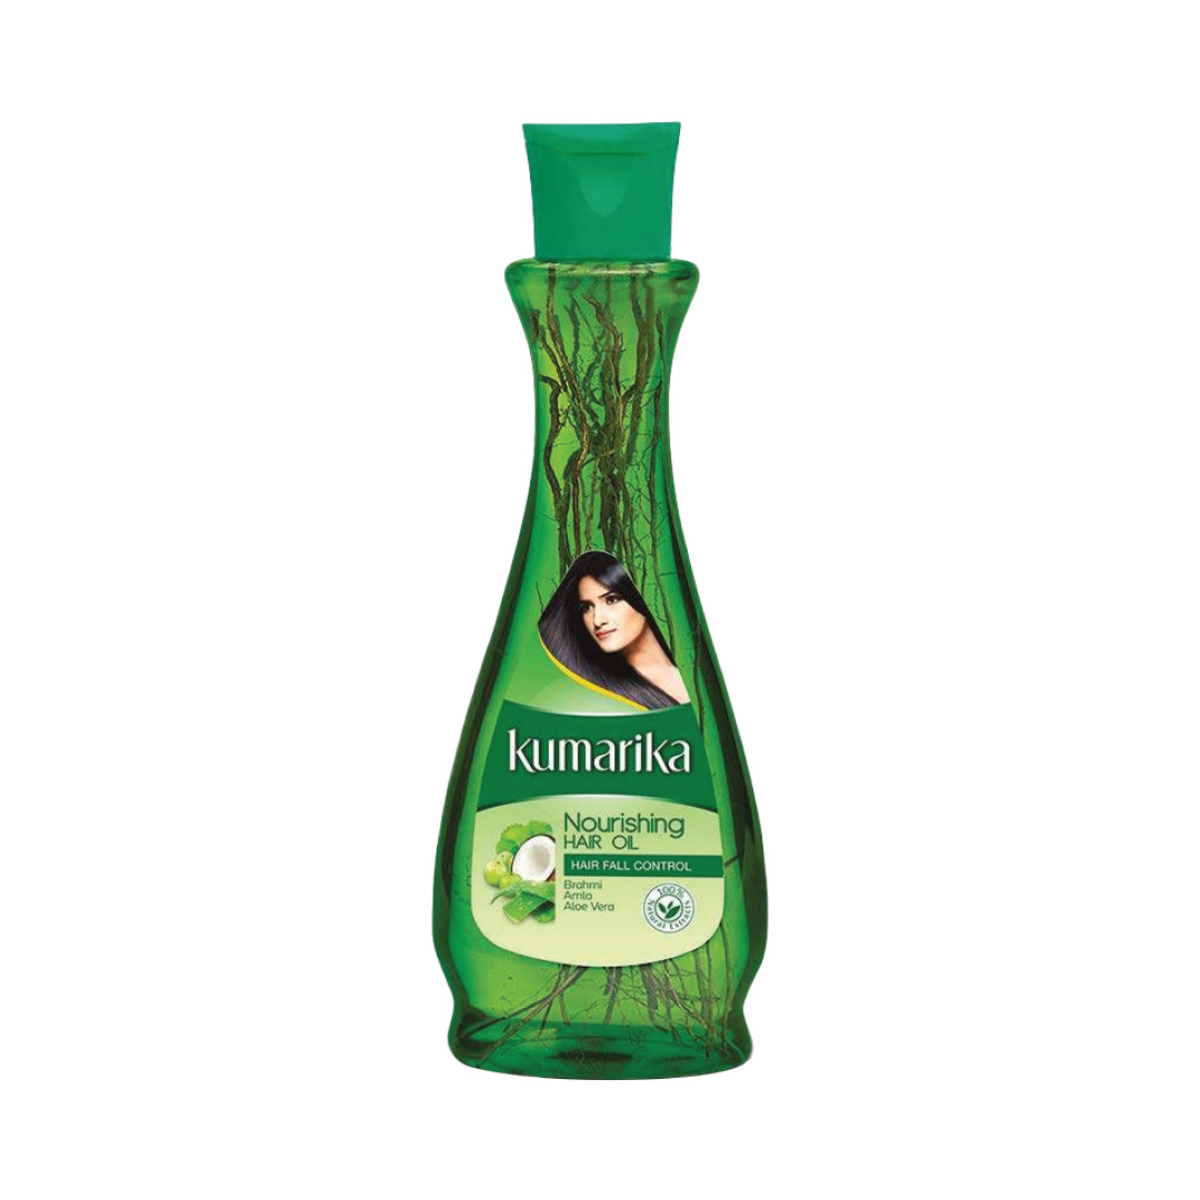 Kumarika Nourishing Hair Oil Hair Thinning Control 200ml